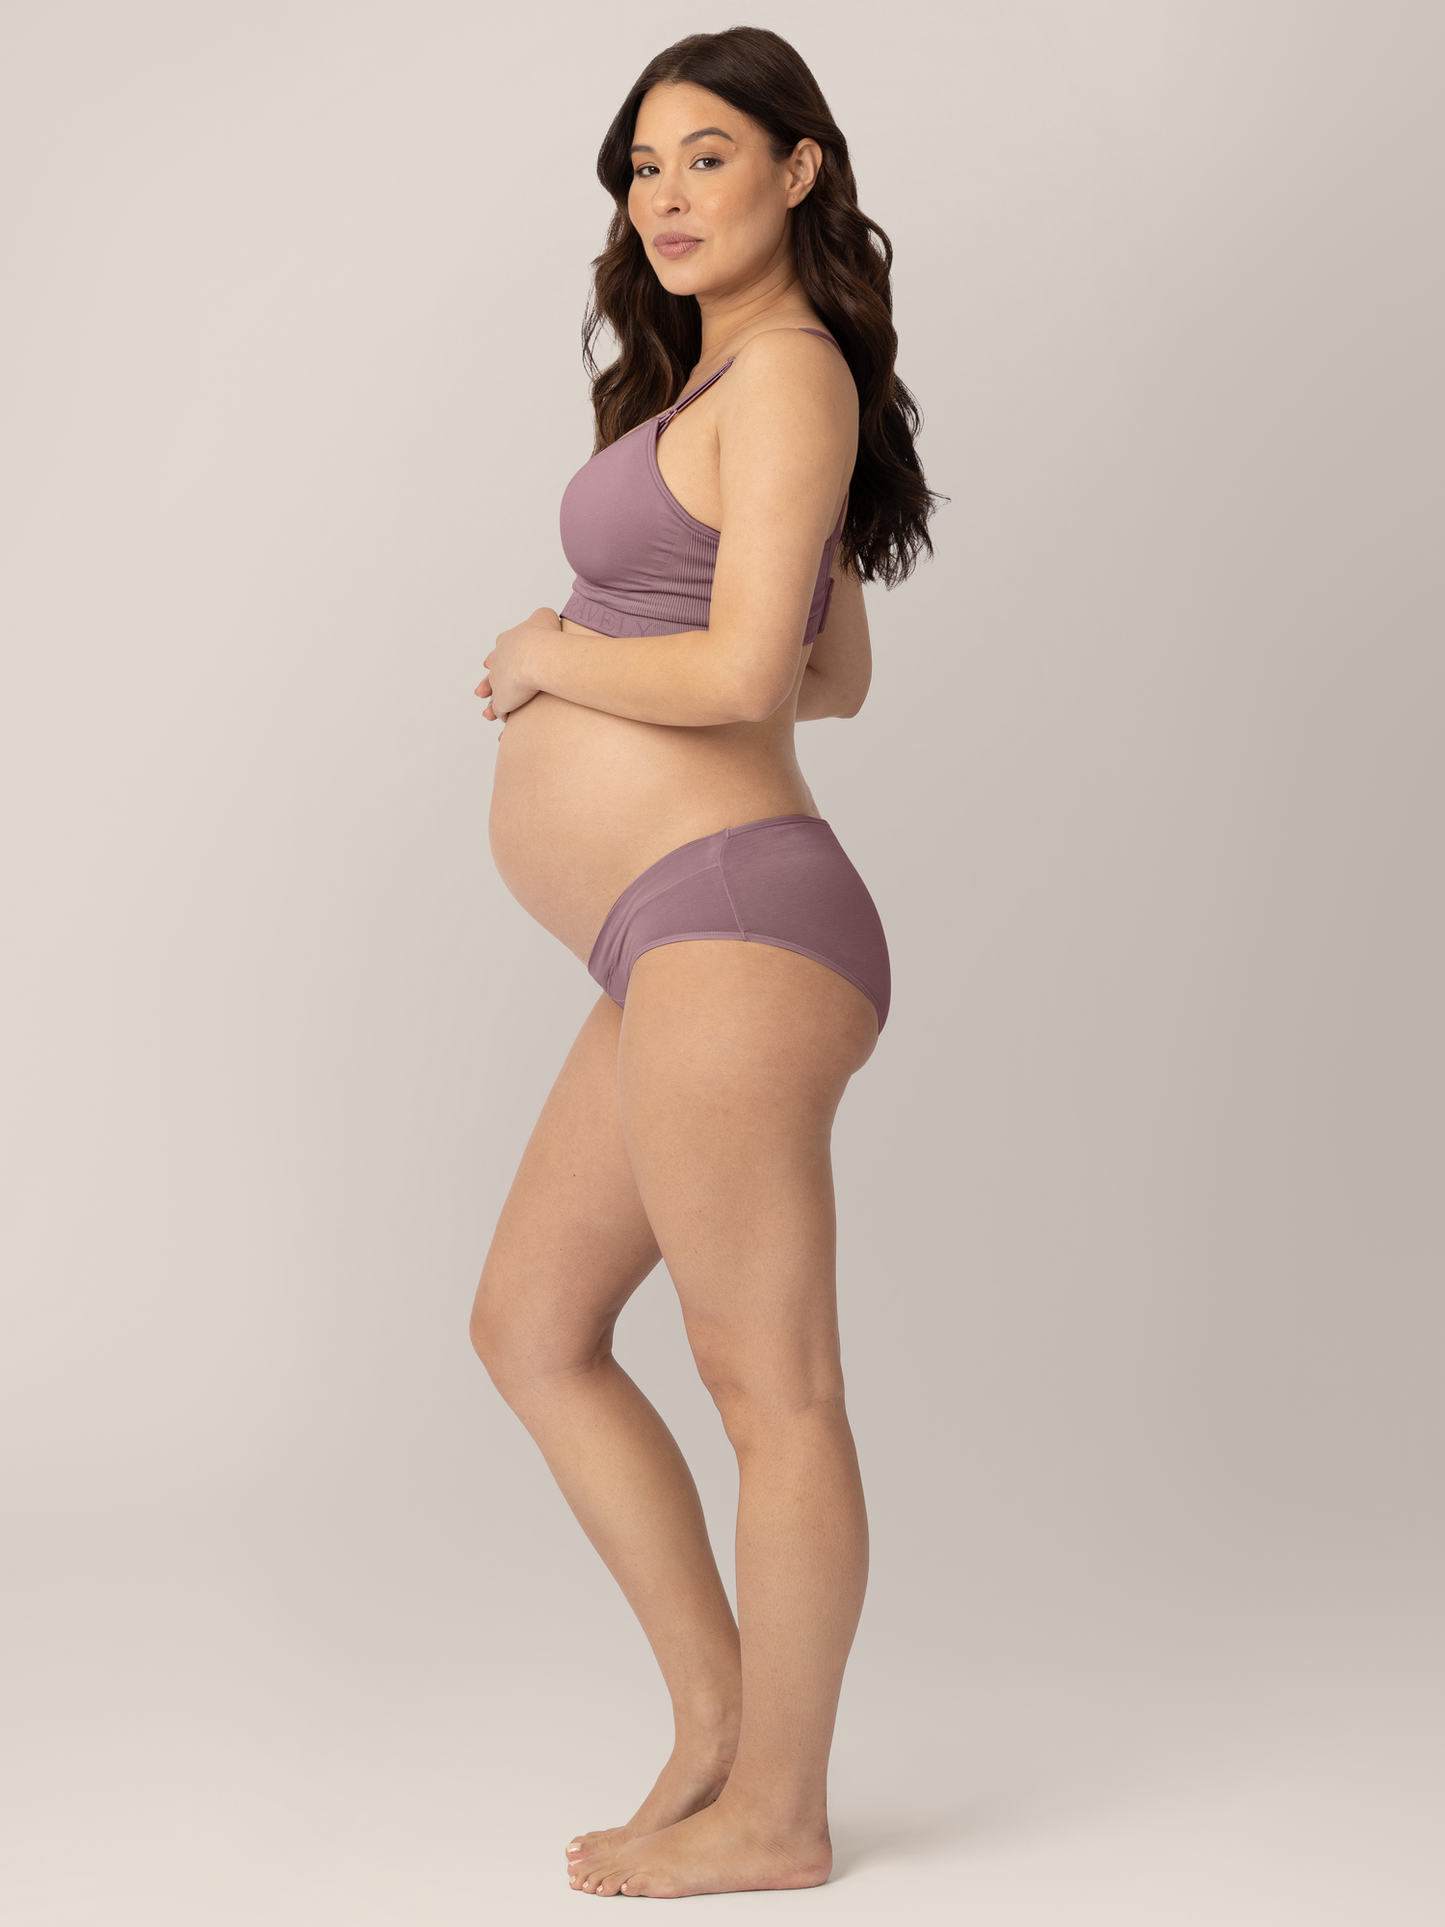 Project Cece  Low waist maternity panties